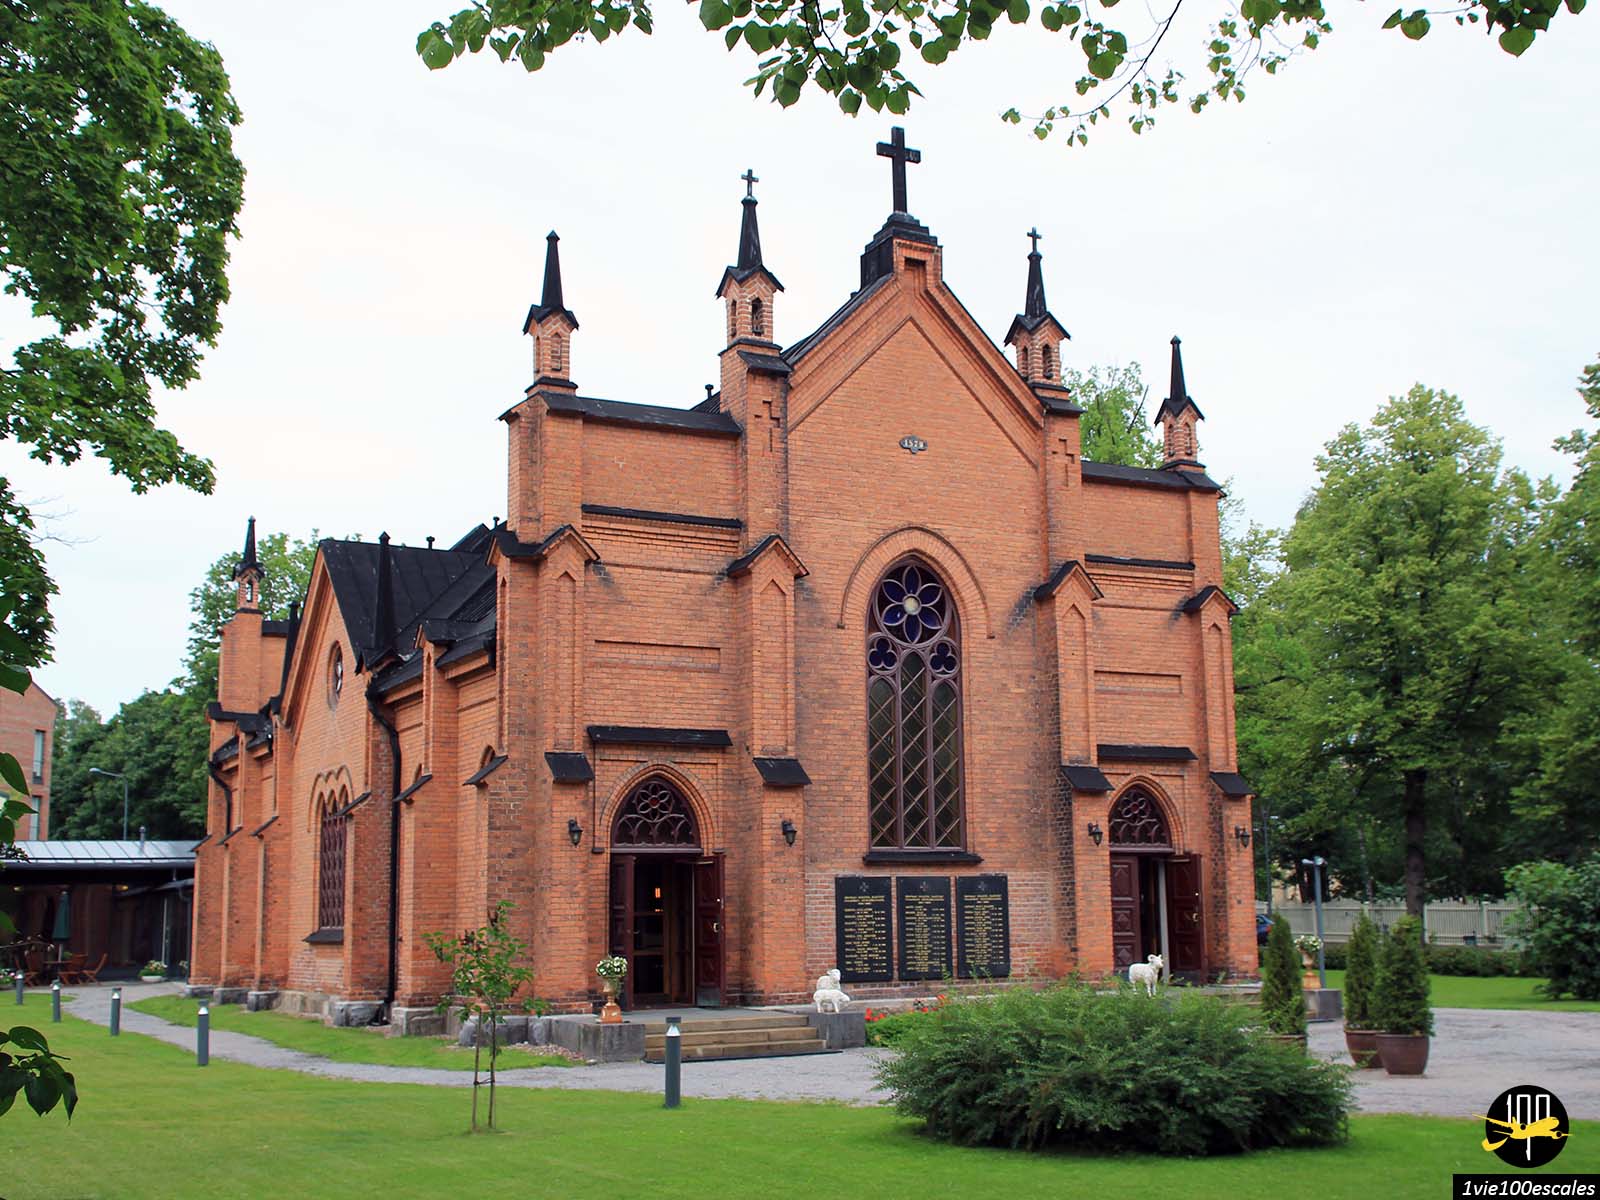 La belle Église de Finlayson en Brique à Tampere en Finlande